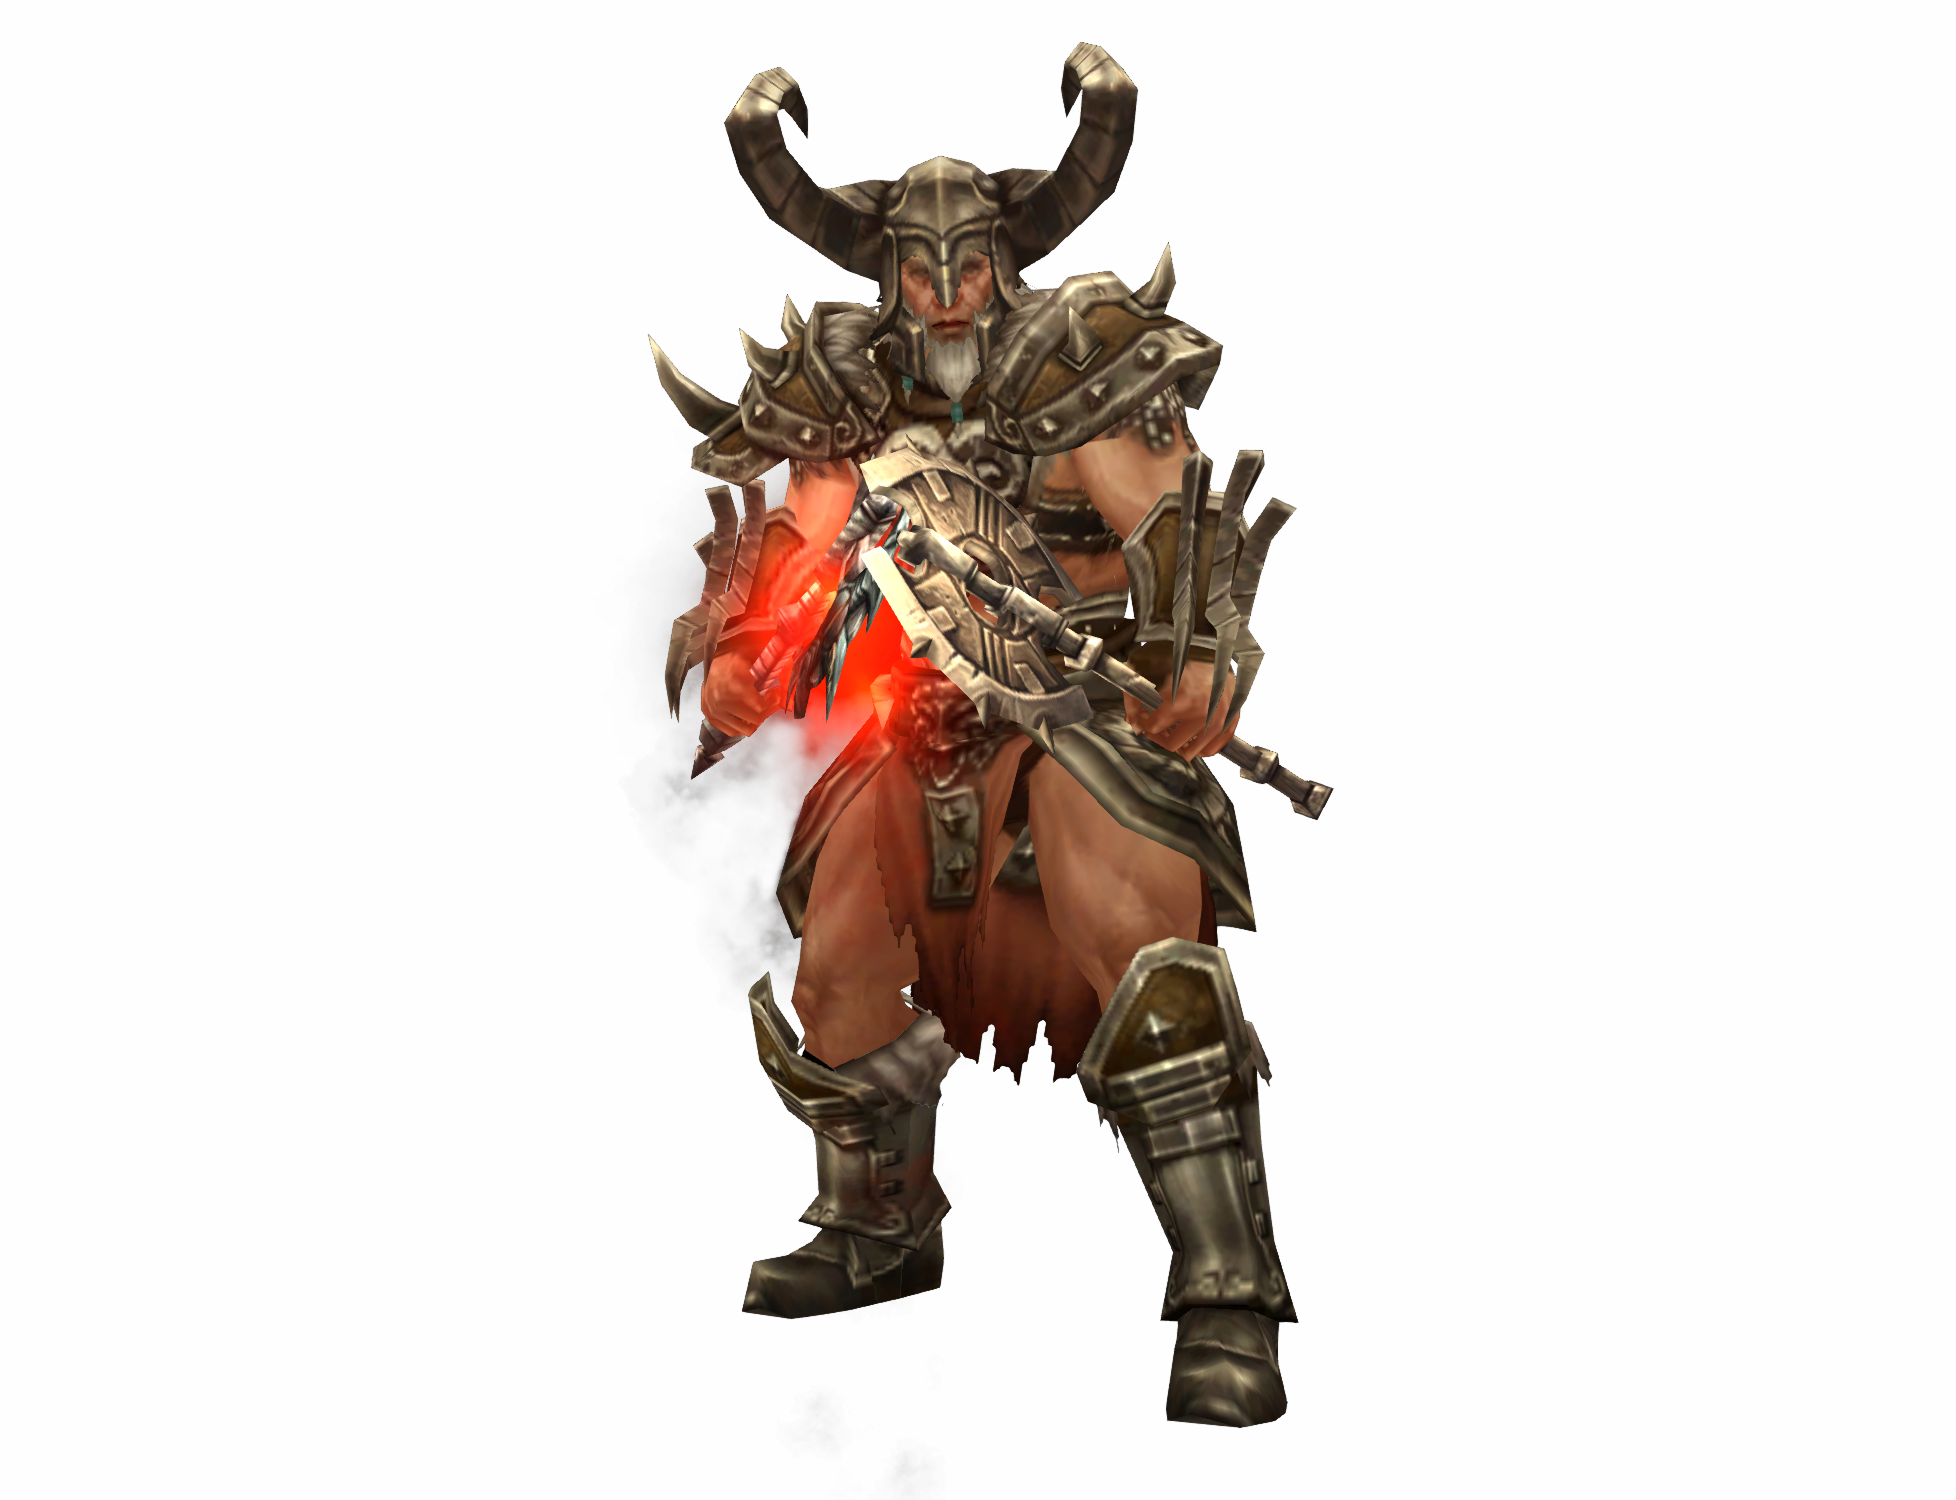 Diablo III: Eternal Collection screencap (Blizzard)